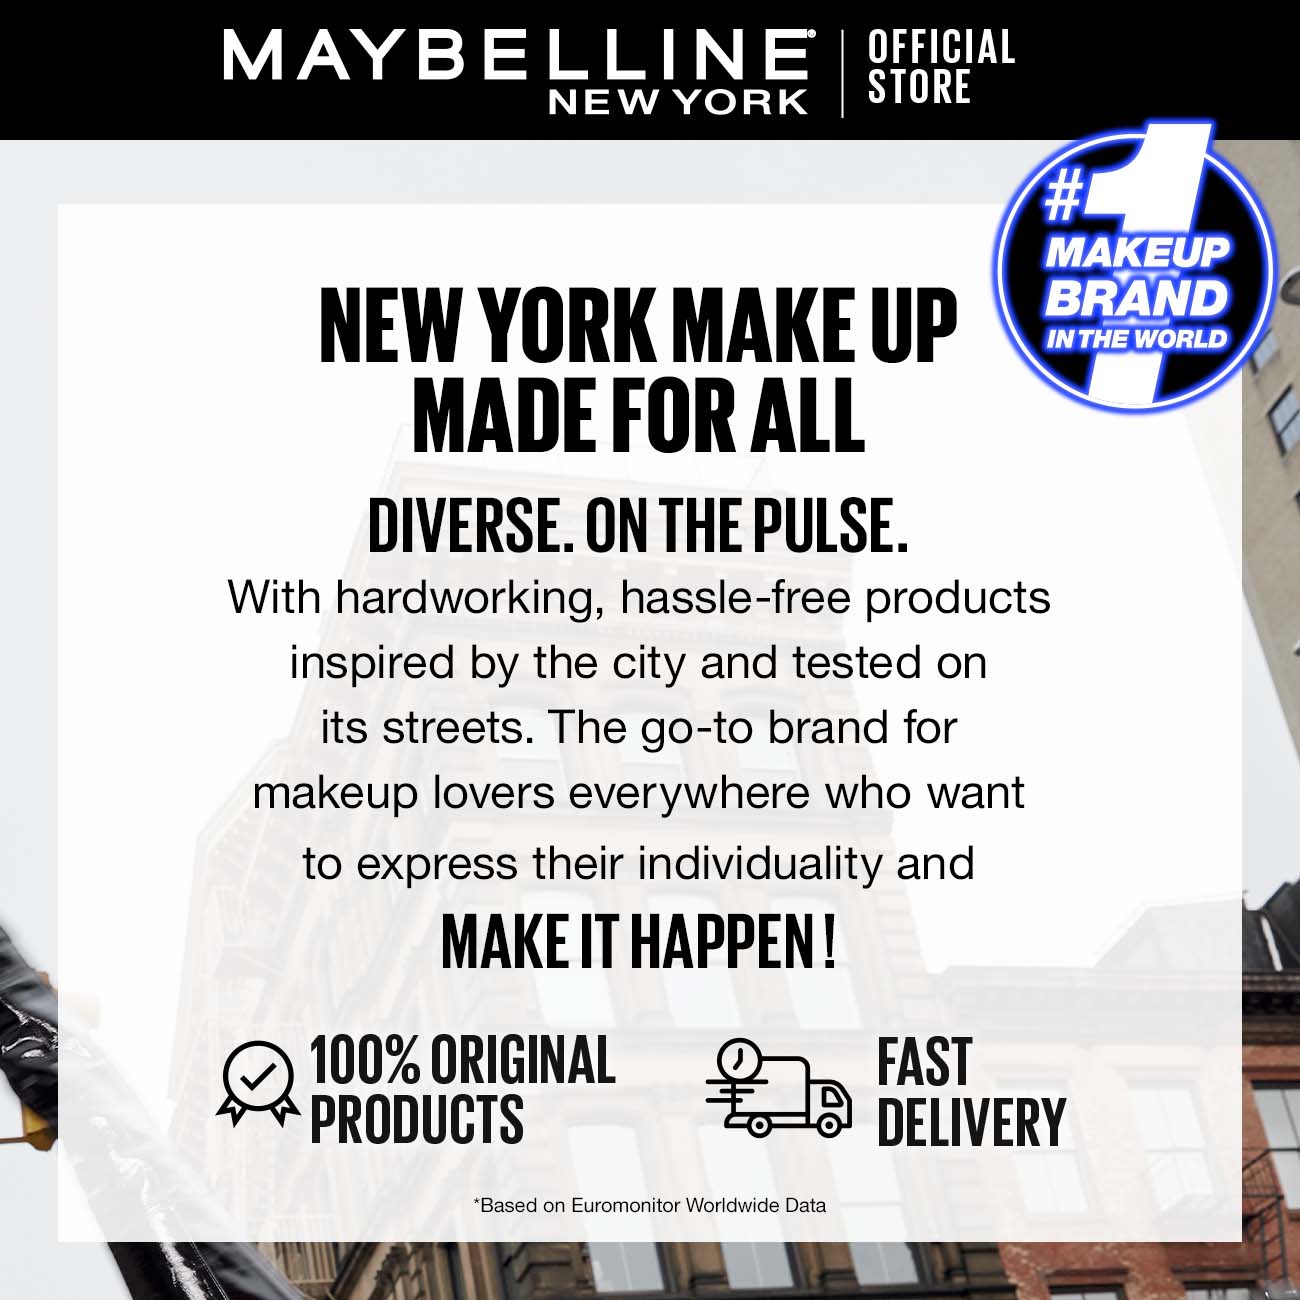 Maybelline New York Superstay Vinyl Ink - Coy